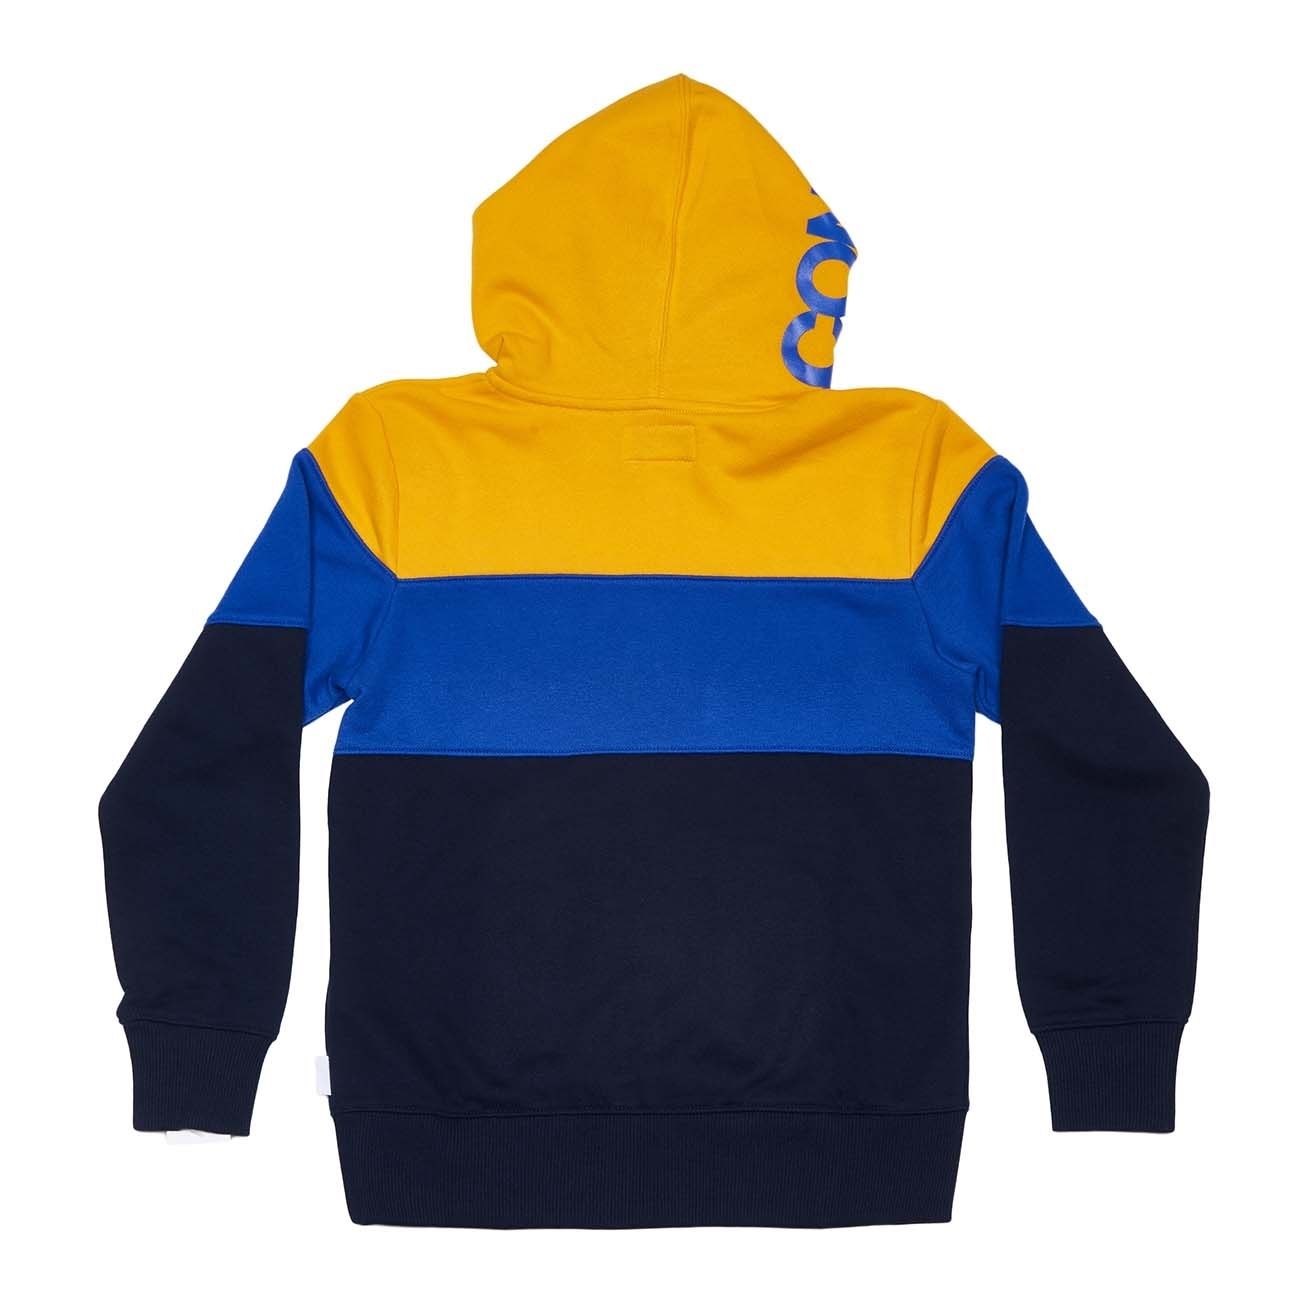 CONVERSE SWEATSHIRT Kid Blue navy yellow | Mascheroni Sportswear